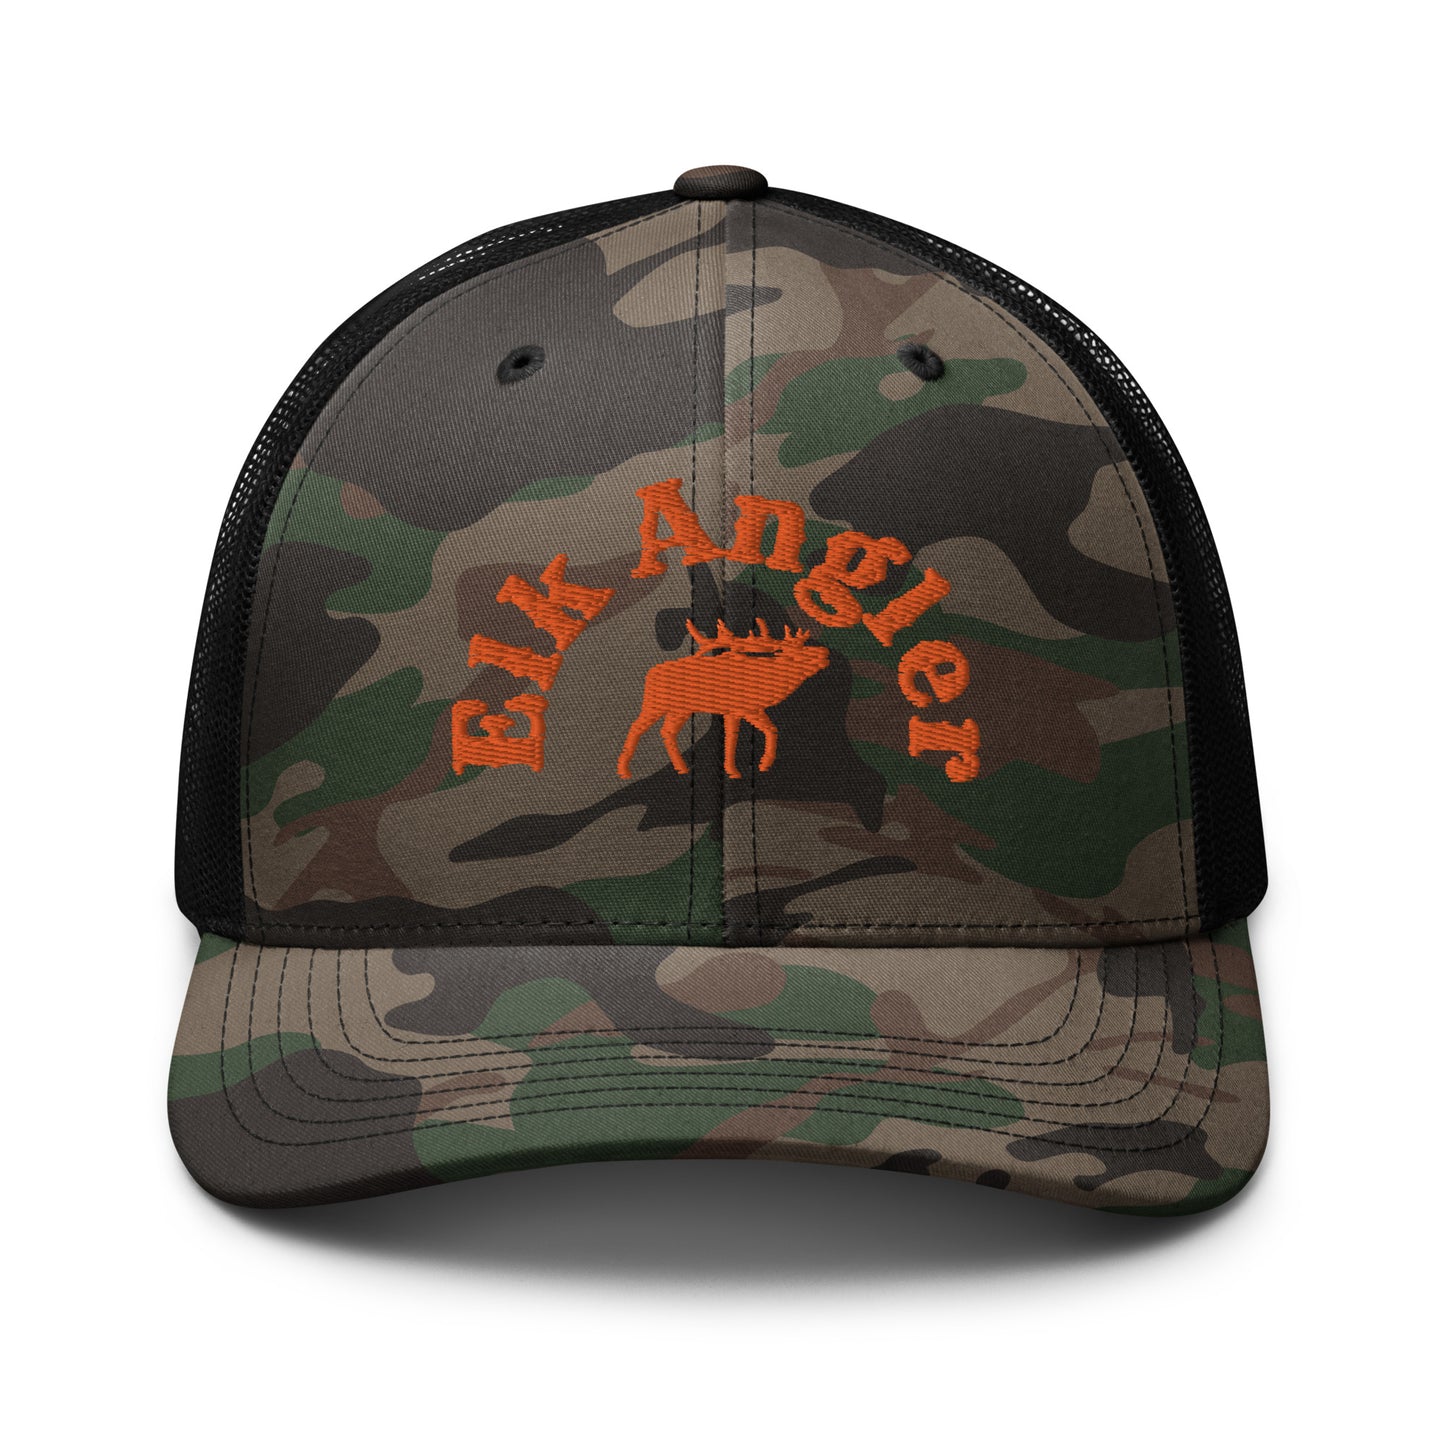 Camouflage elk hunting hat